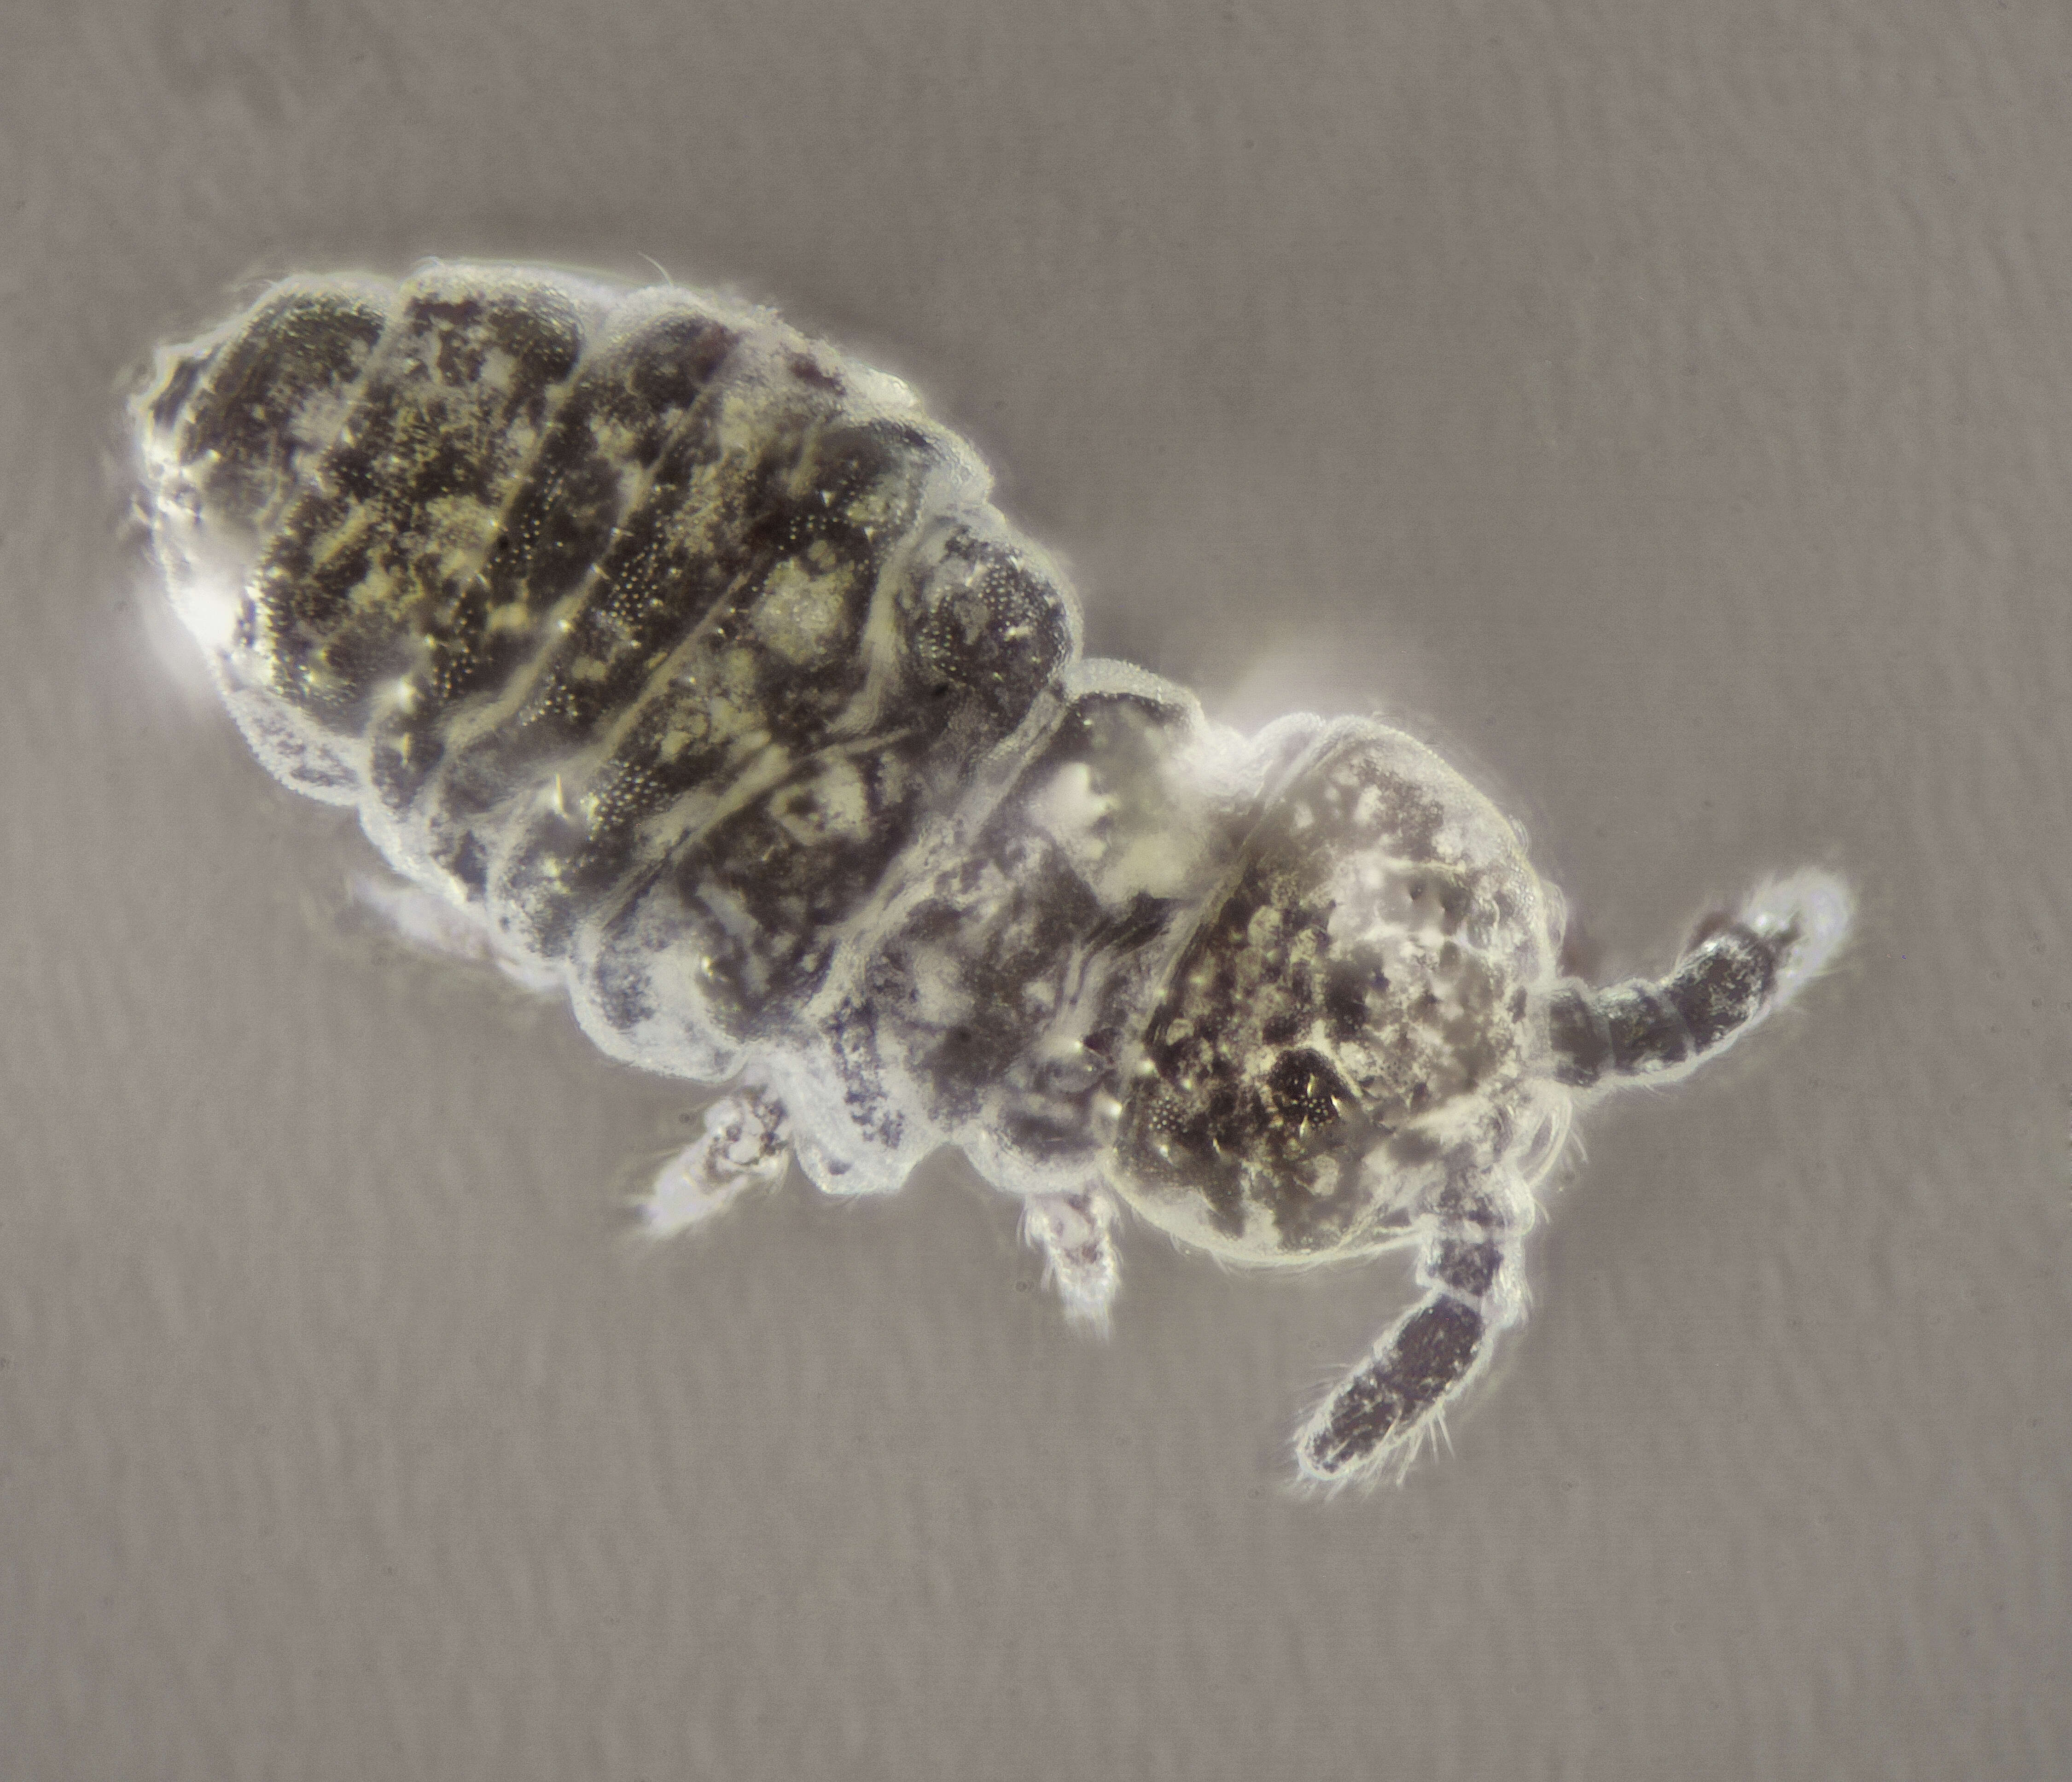 Image of Hypogastruroidea